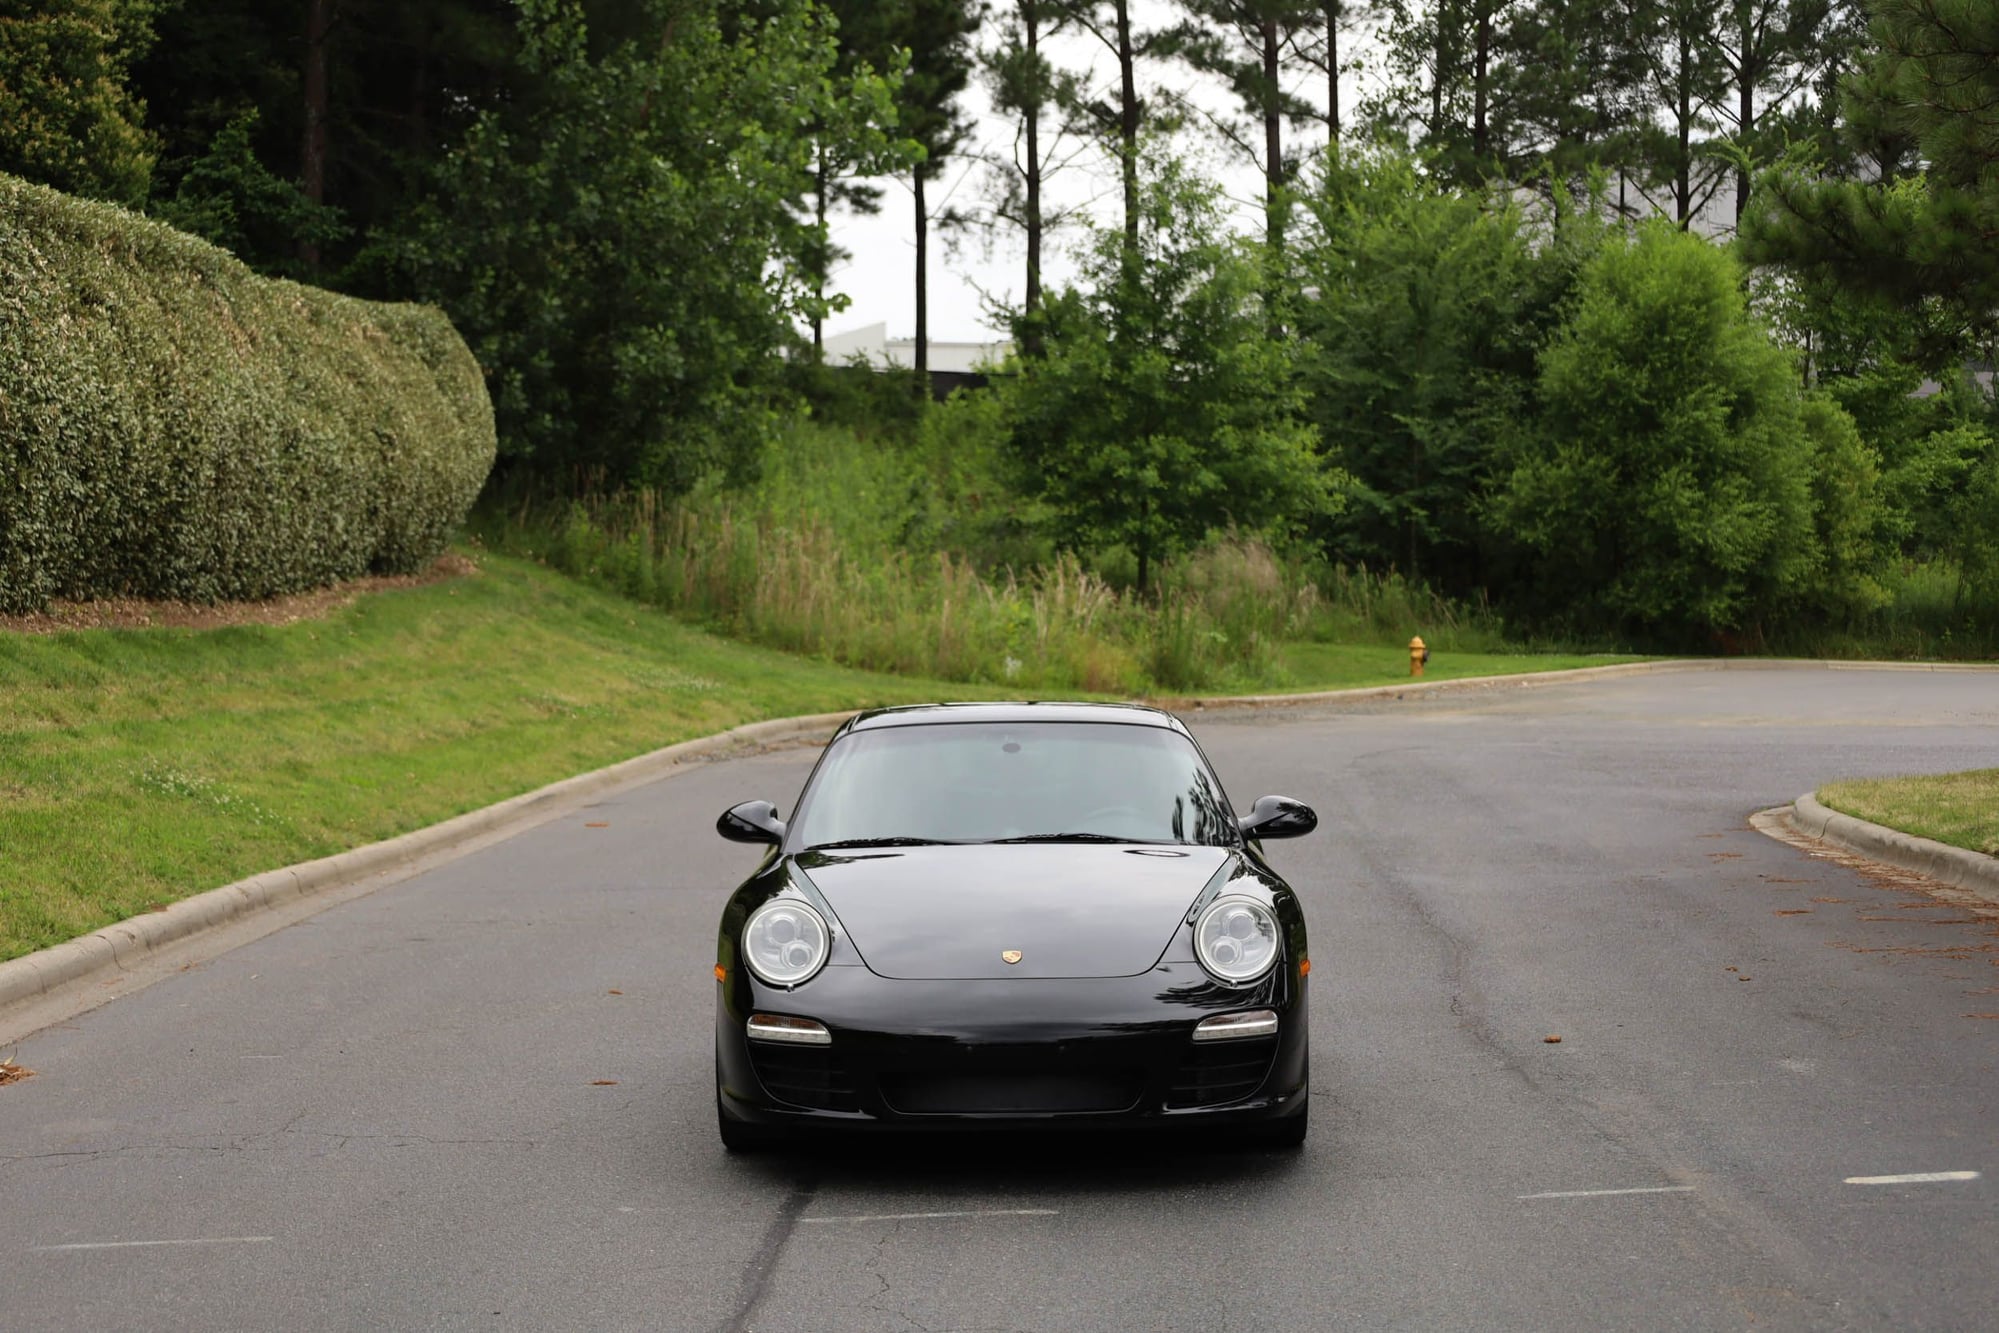 2012 Porsche 911 - 2012 Porsche 997.2 Carrera S ( 6 Speed Manual, Service Hist, CPO) - Used - VIN WP0AB2A95CS720393 - 88,375 Miles - 6 cyl - 2WD - Manual - Coupe - Black - Charlotte, NC 28273, United States